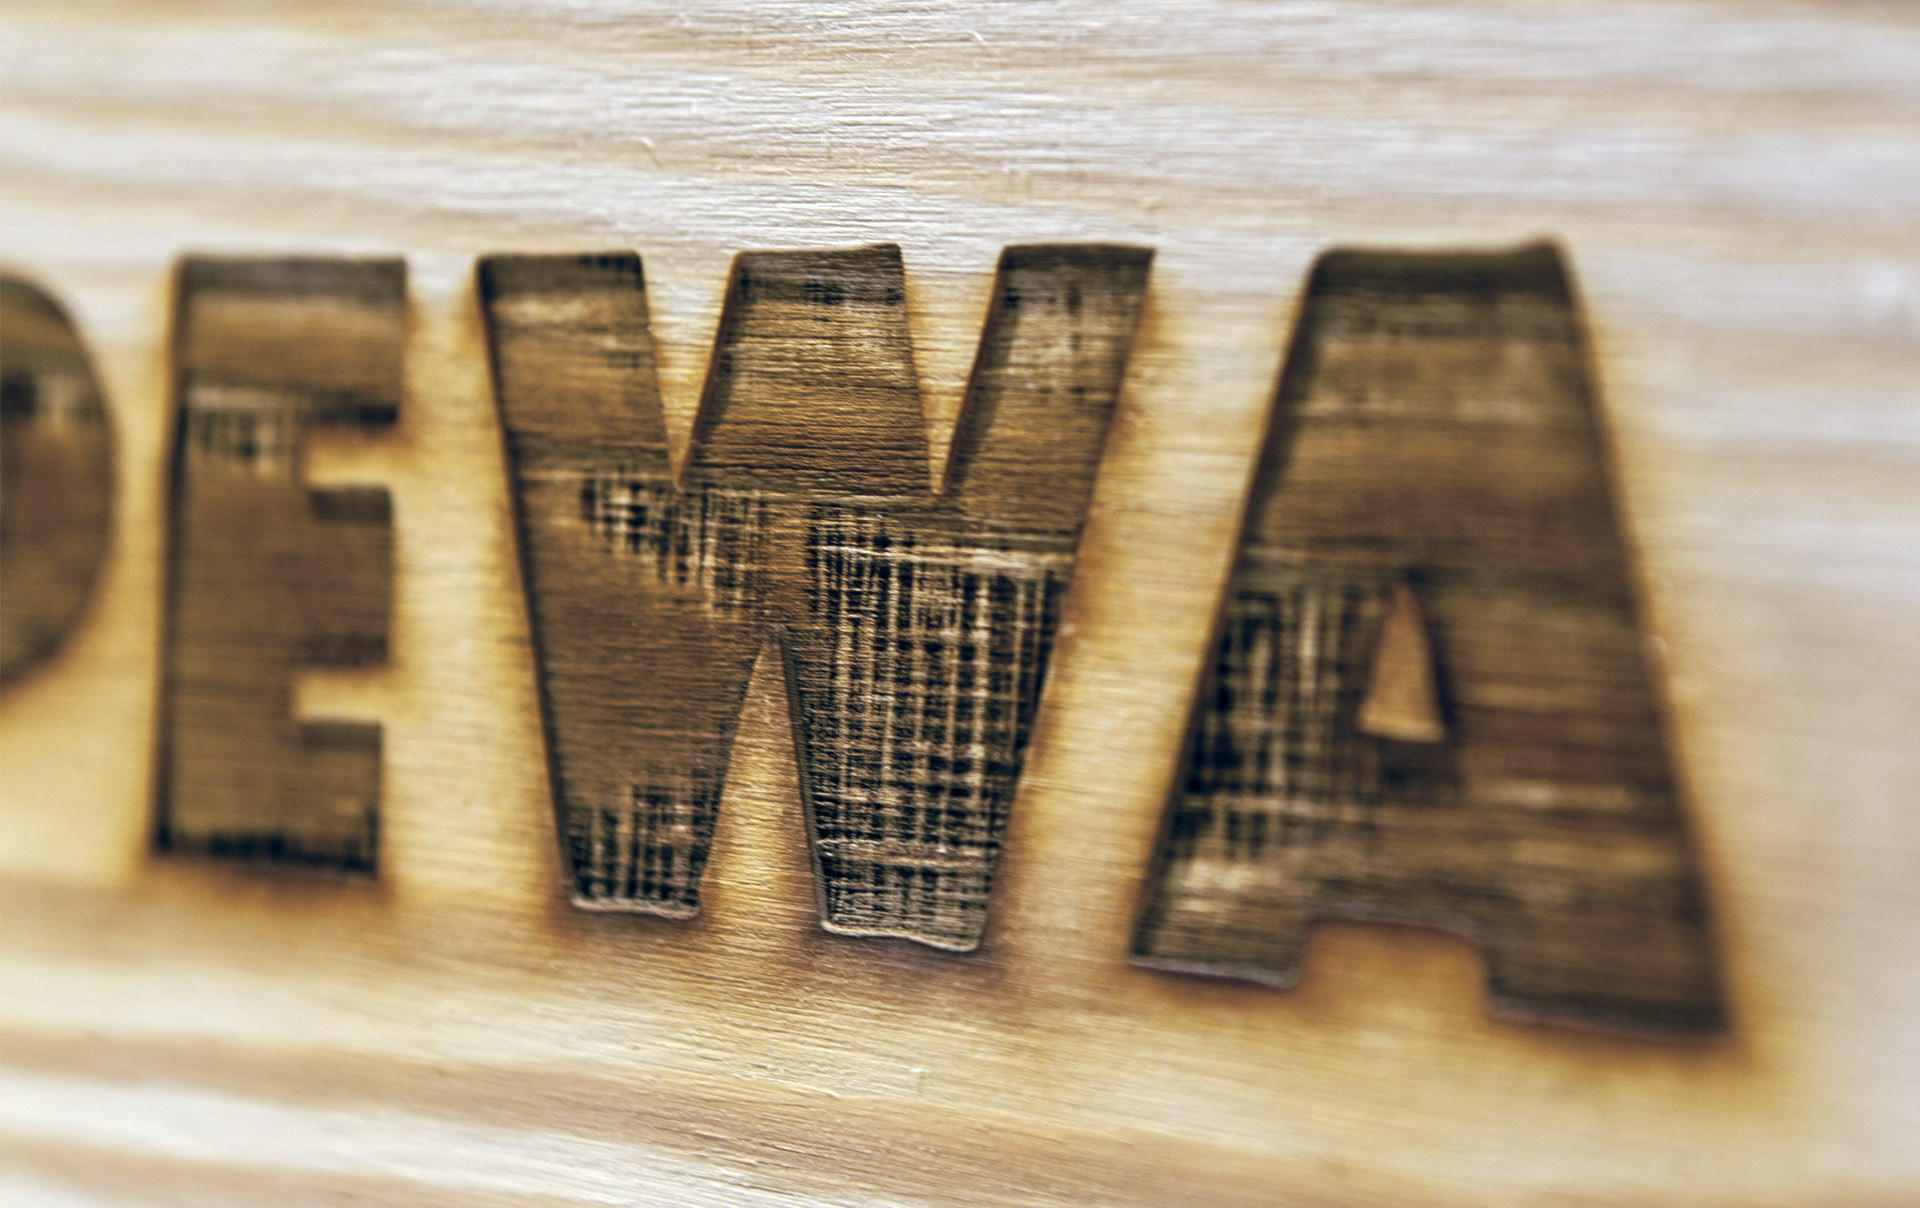 Chippewa Logo Holz Lasergravur,Lasergravur in Holz, Schuhhersteller, Holzbearbeitung, Innenausbau, Möbel, interior, Design, gestaltung, grafik, indianer, native american, first nation american